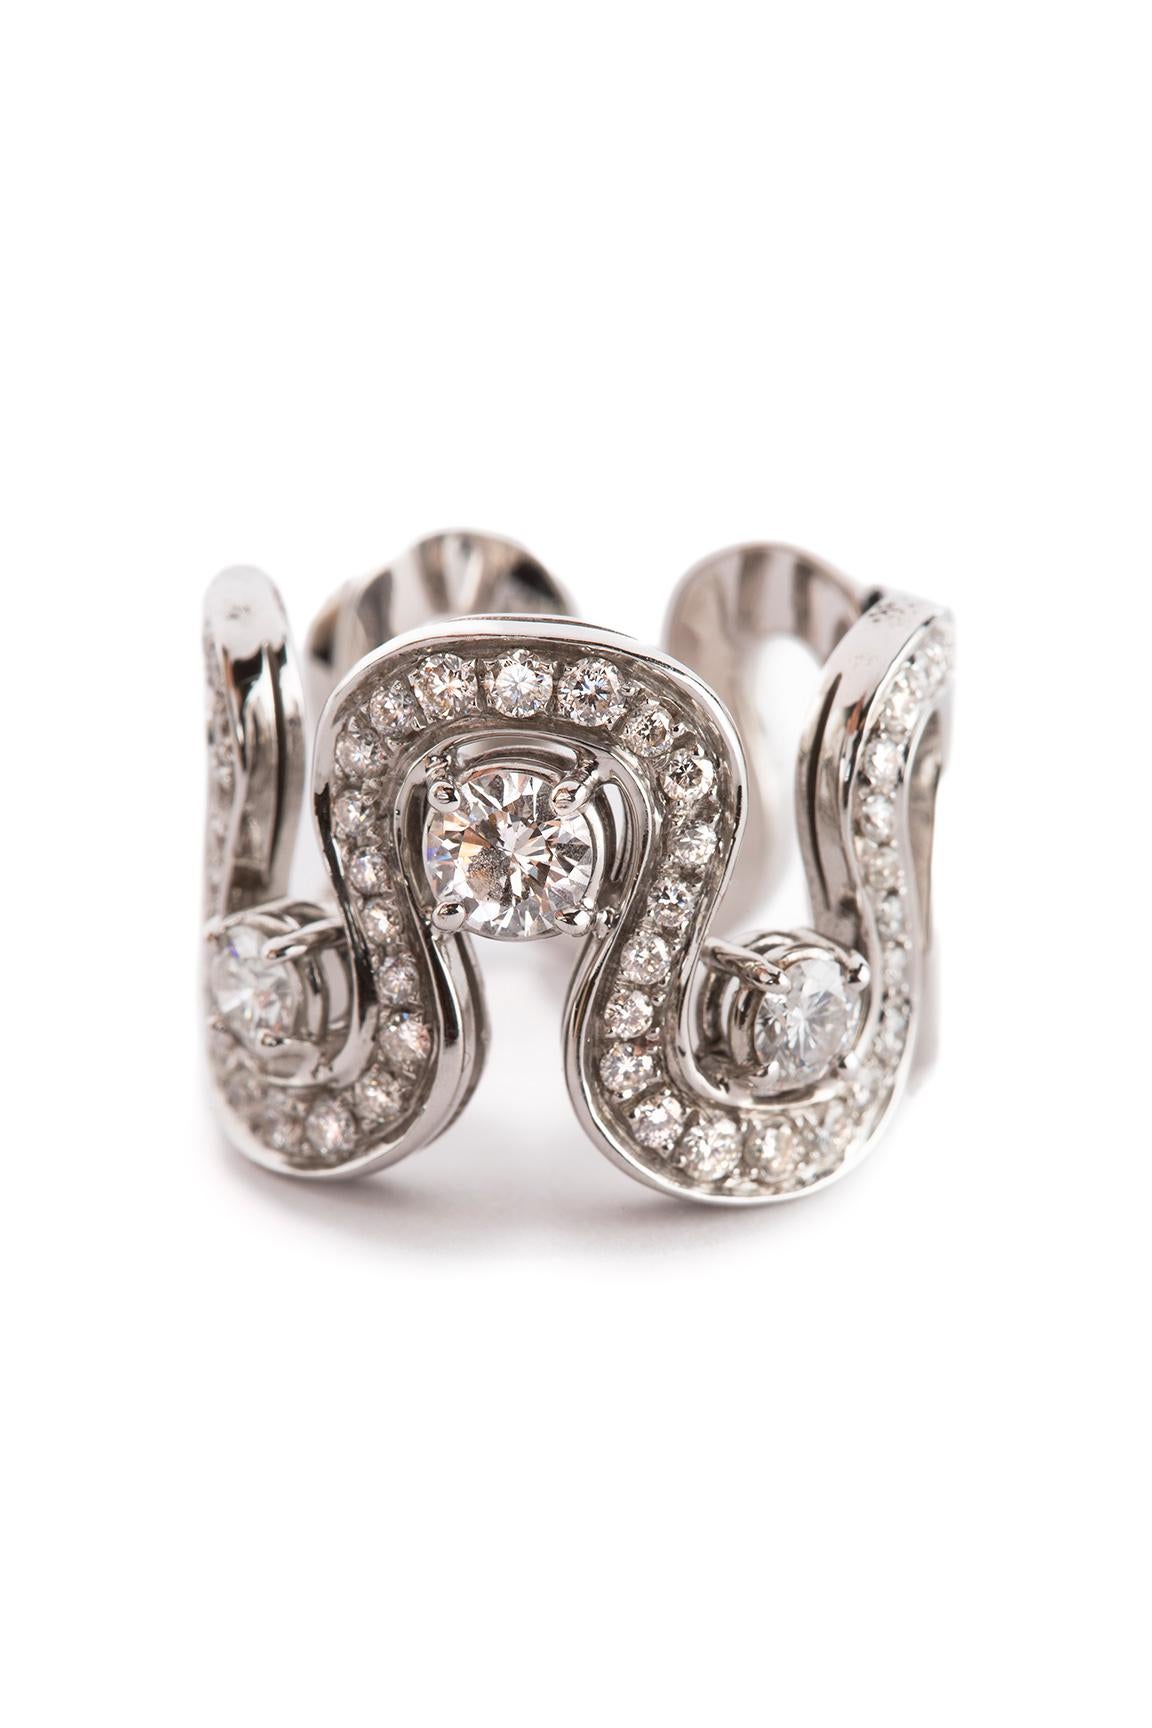 Brilliant Cut Rossella Ugolini 18K Gold 1.54 Carats White Diamond Engagement Design Ring For Sale